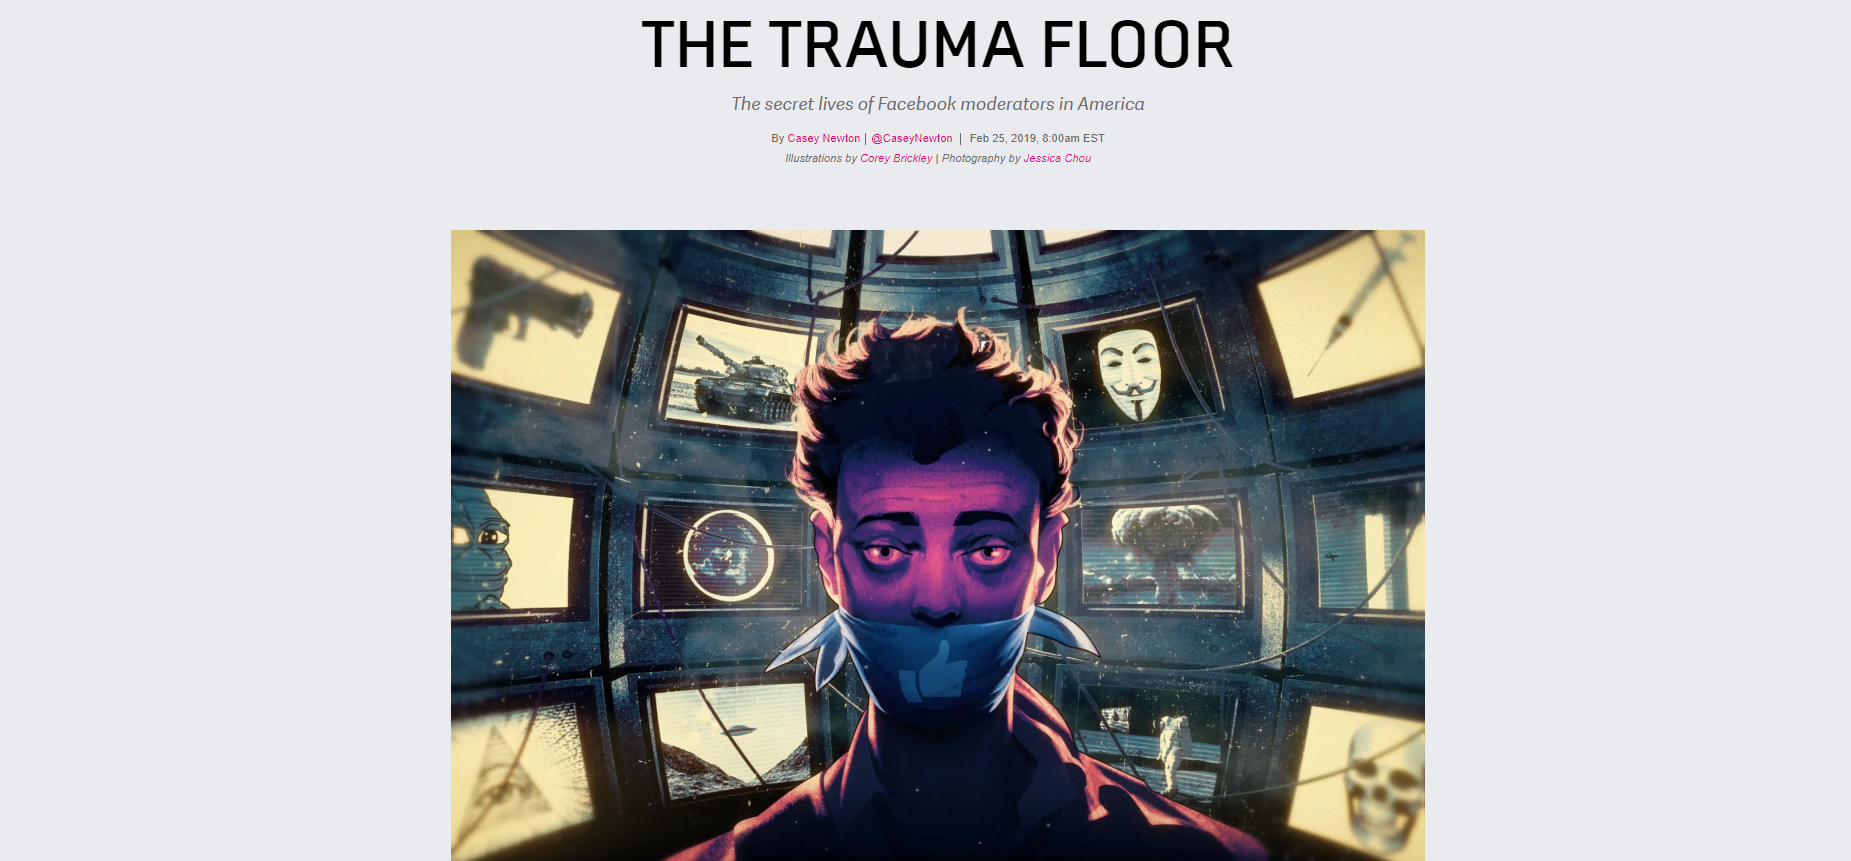 The trauma floor